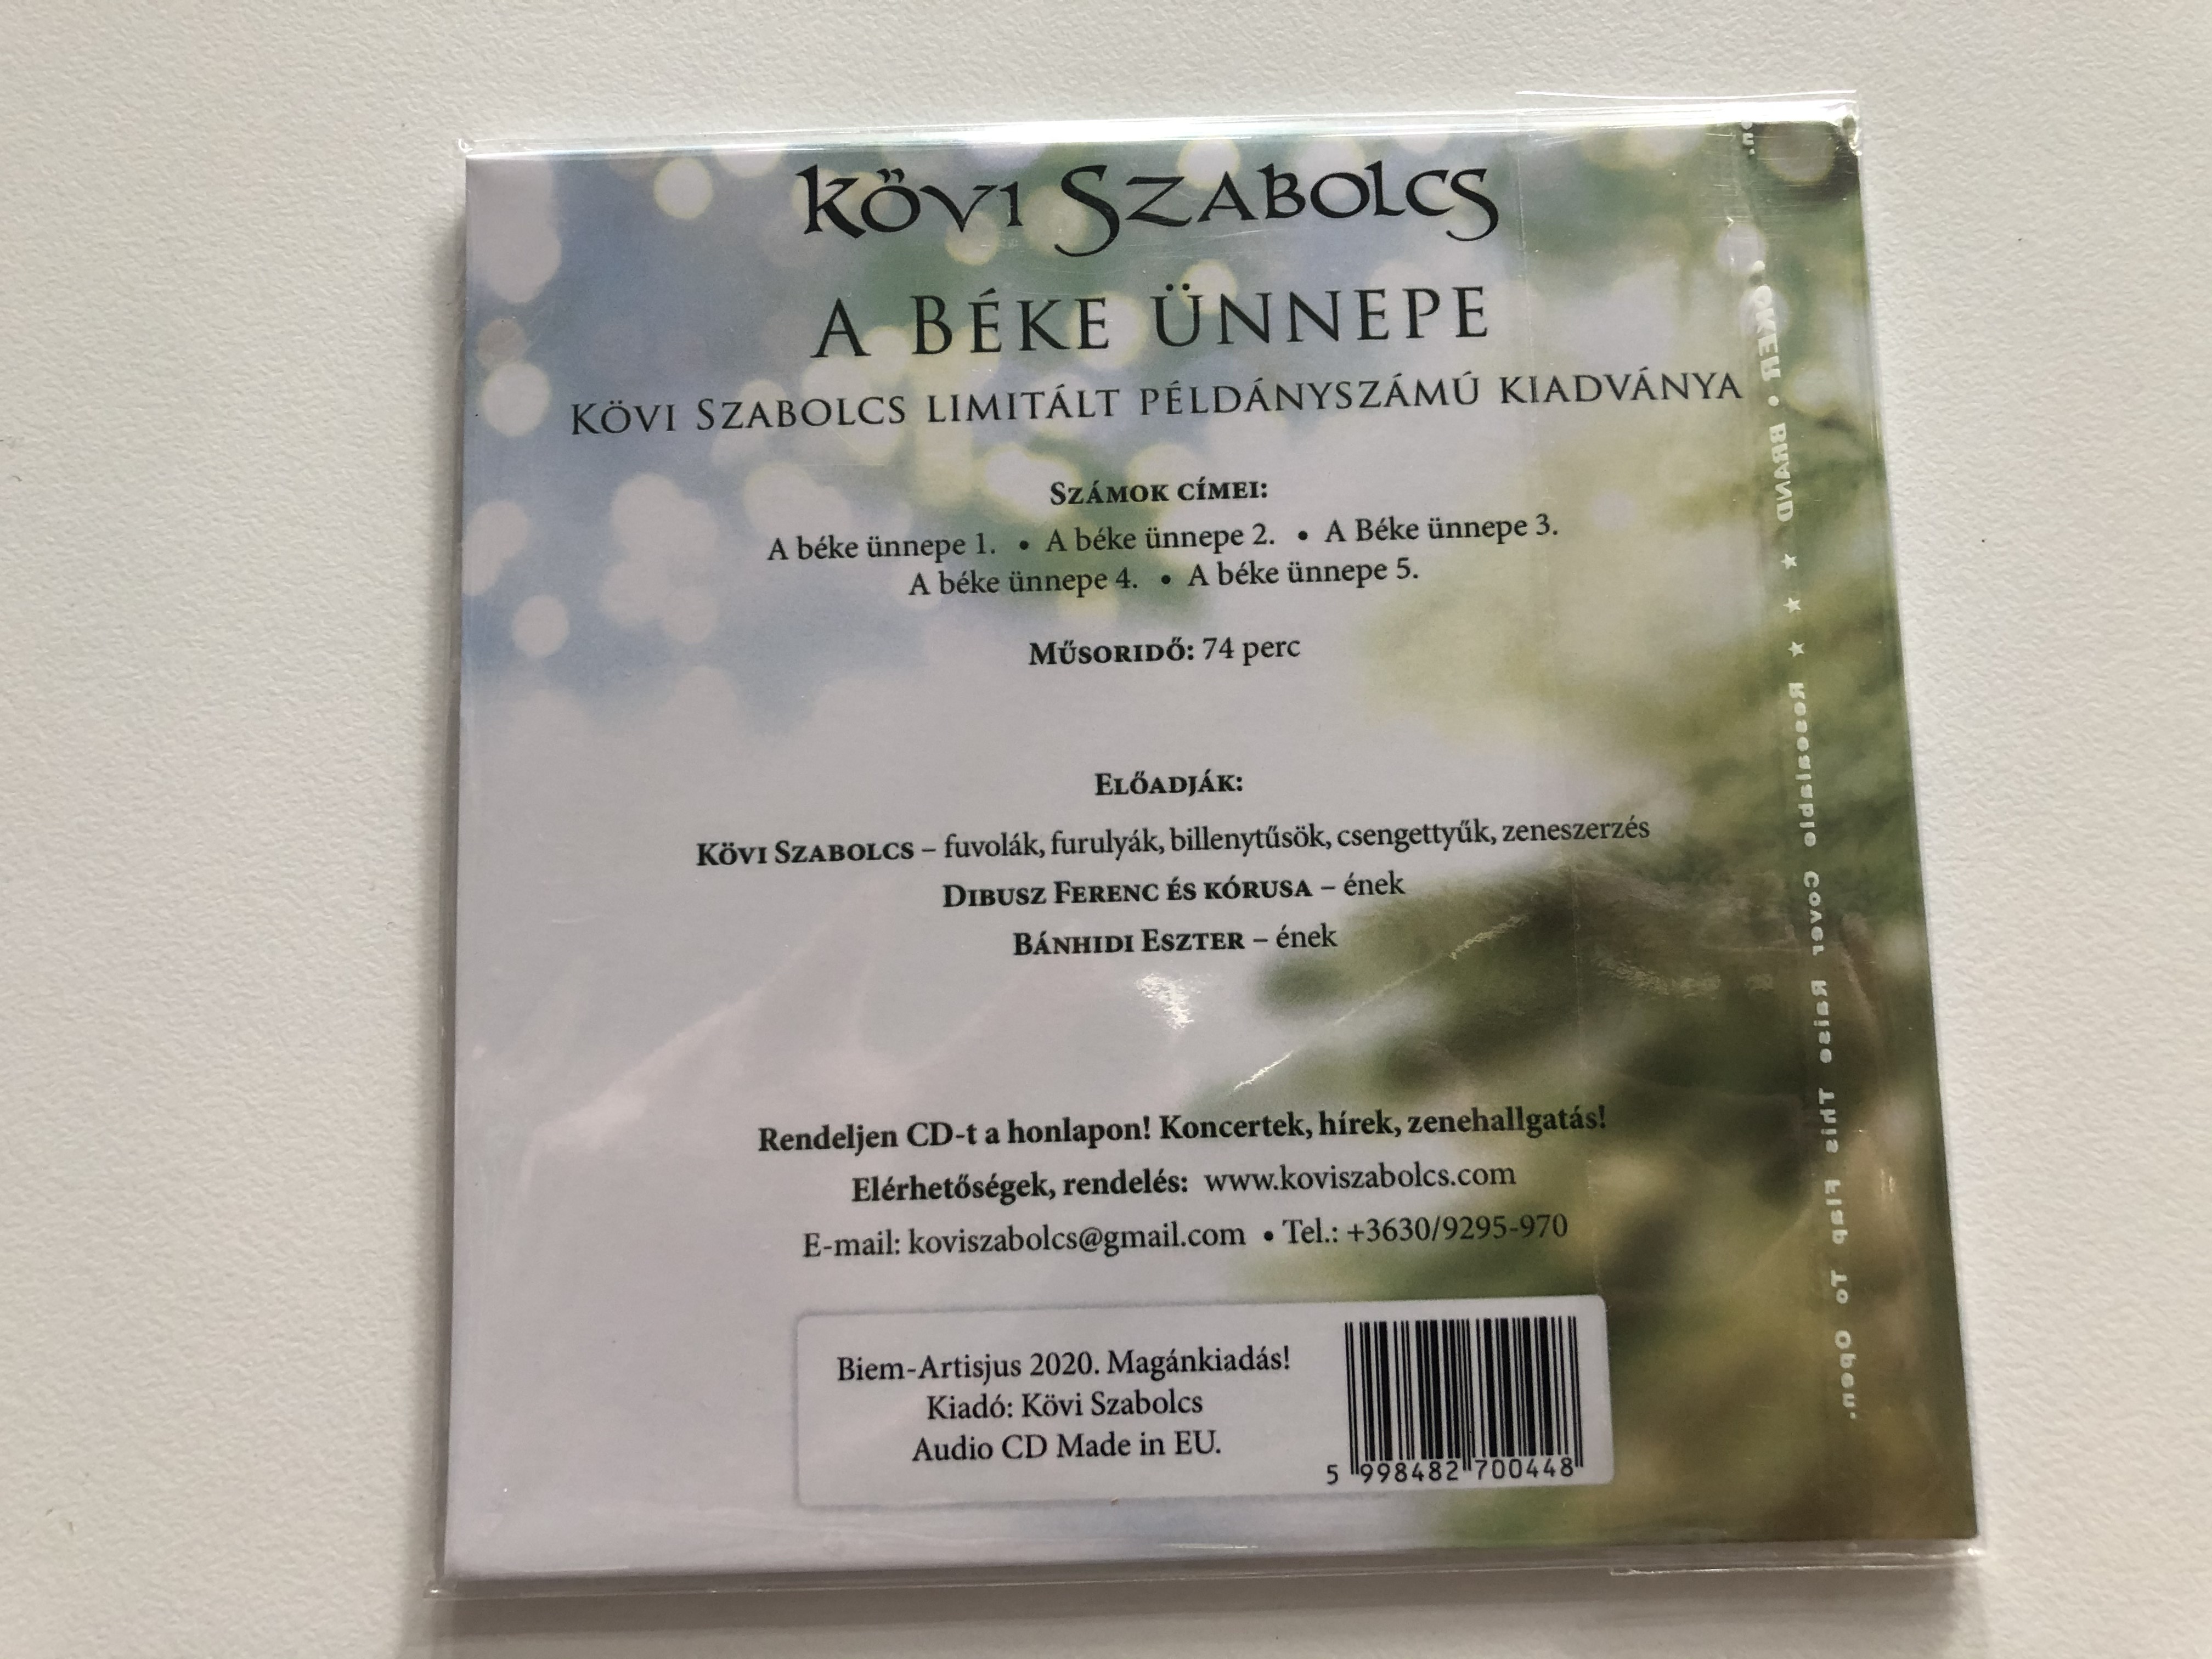 k-vi-szabolcs-a-beke-unnepe-audio-cd-2020-5998482700448-2-.jpg